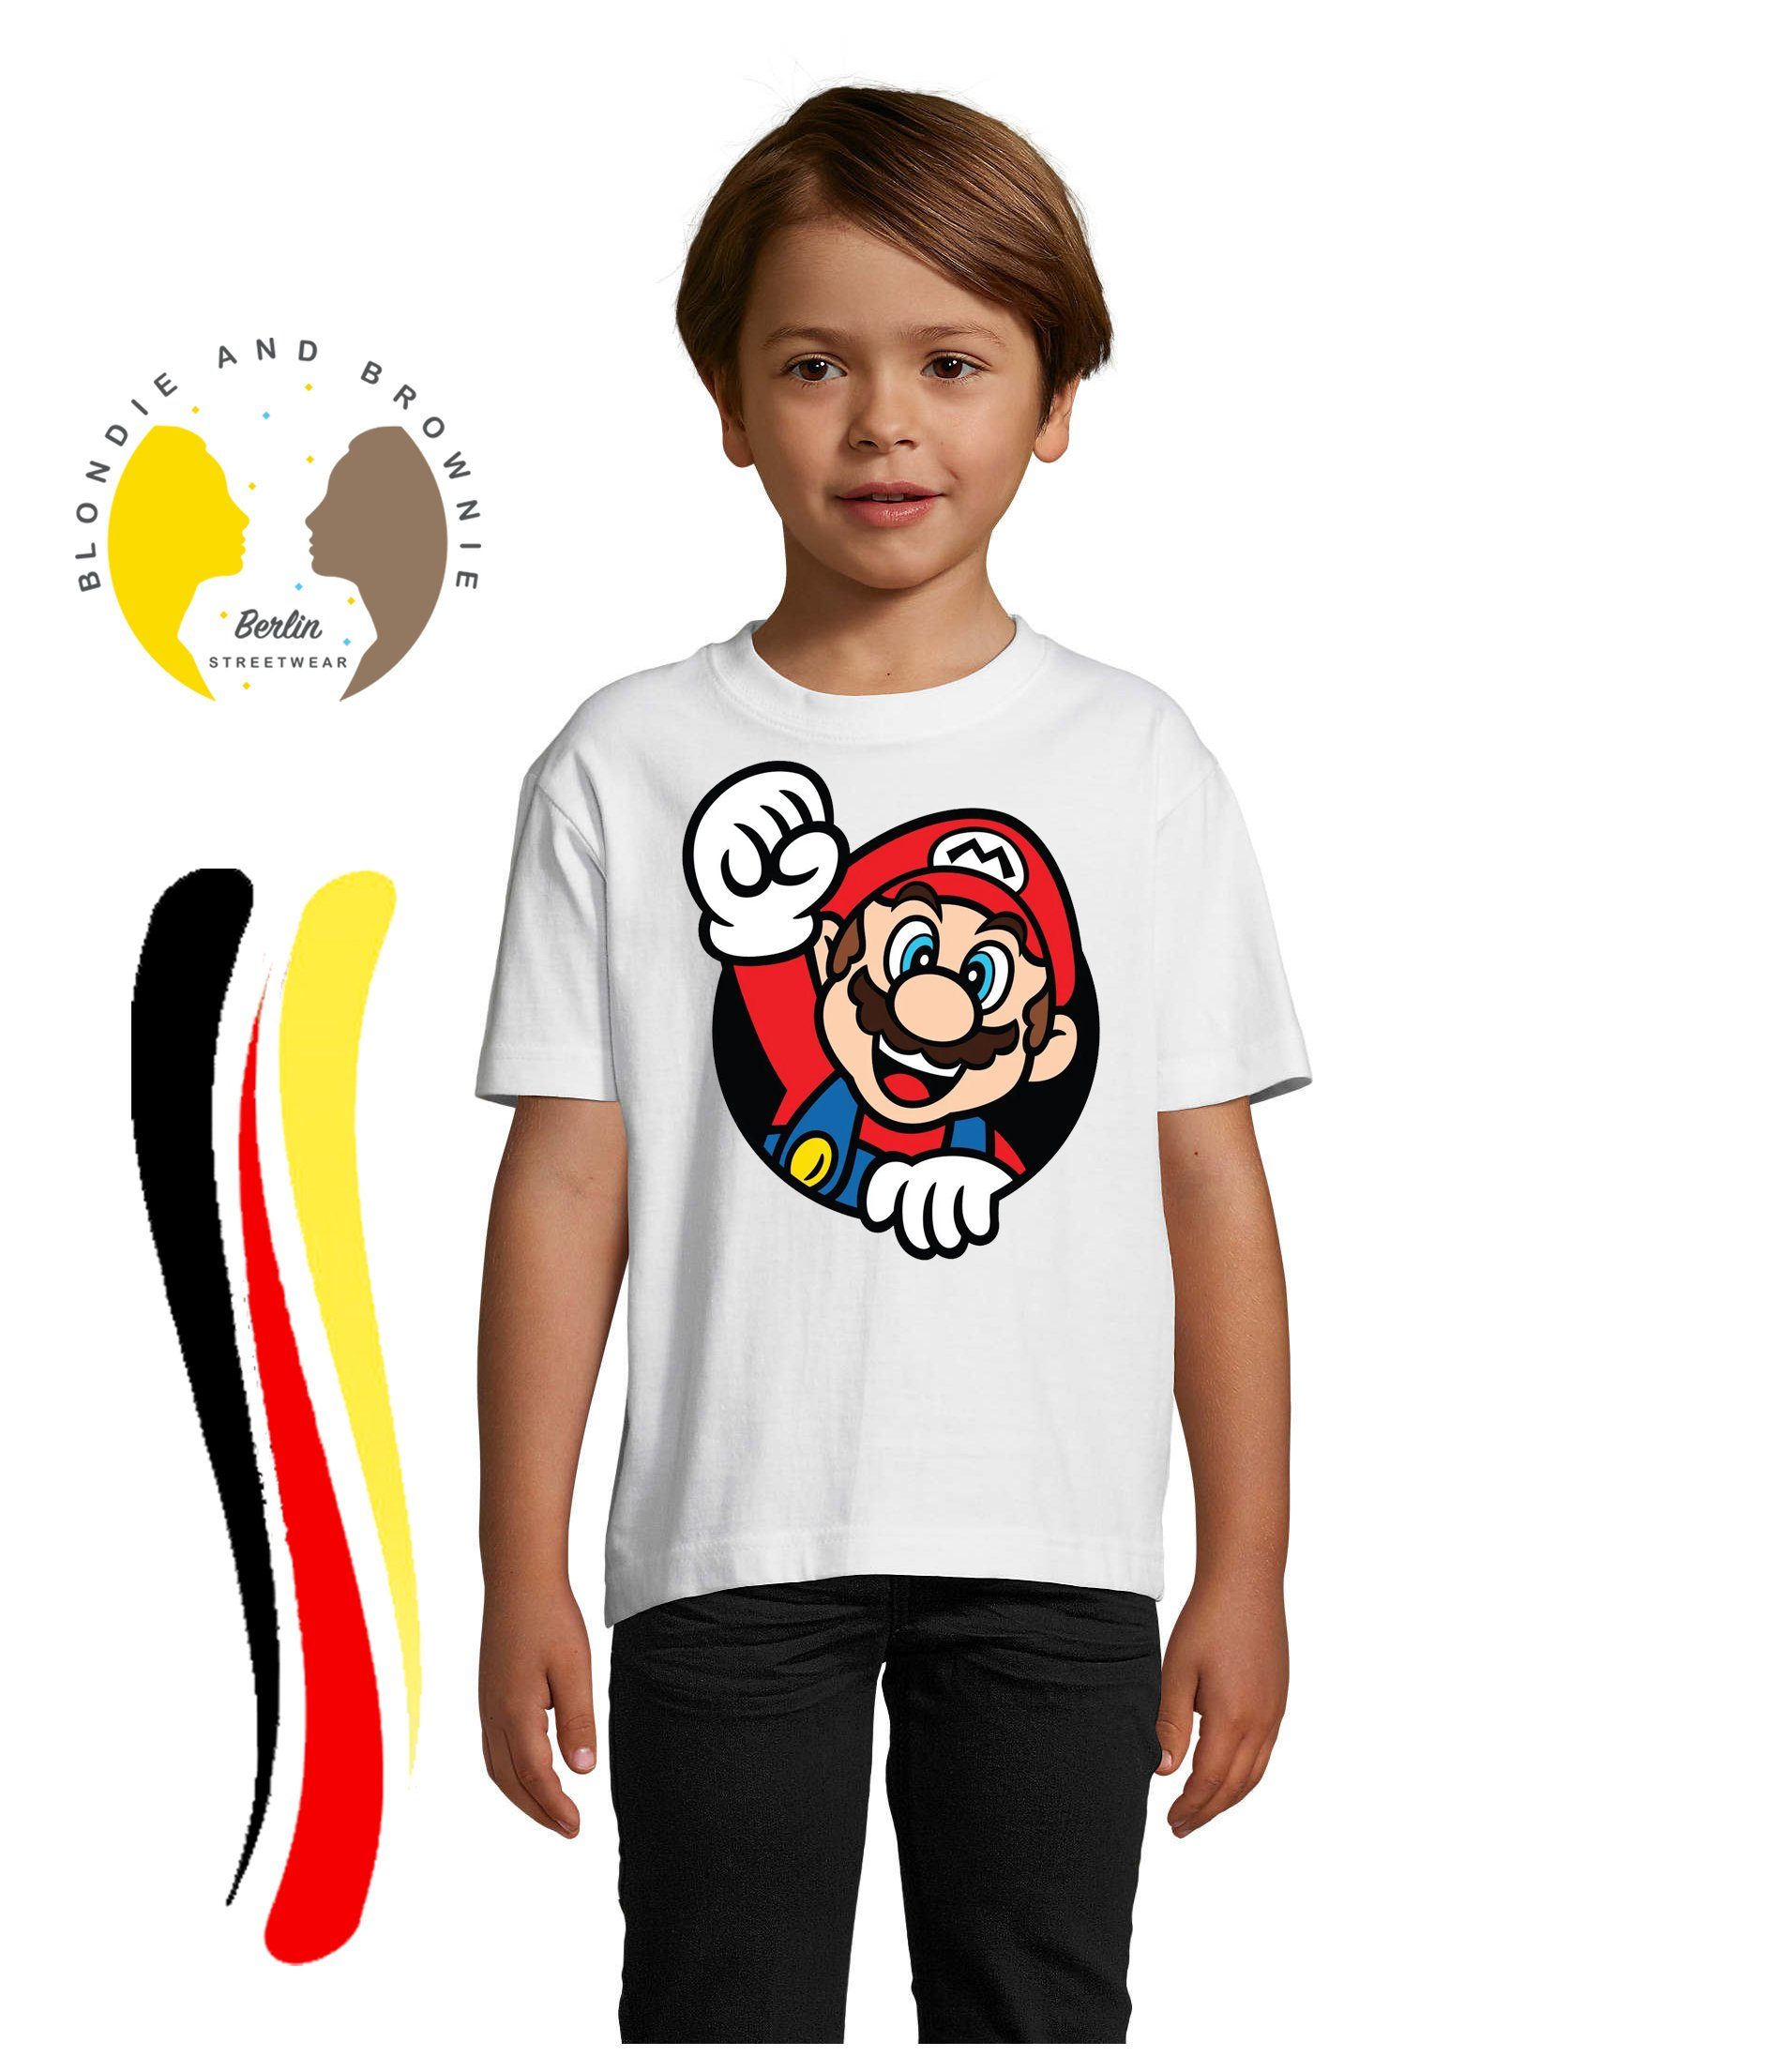 Blondie & Brownie T-Shirt Kinder Super Mario Faust Nerd Konsole Gaming Spiel Nintendo Konsole Weiss